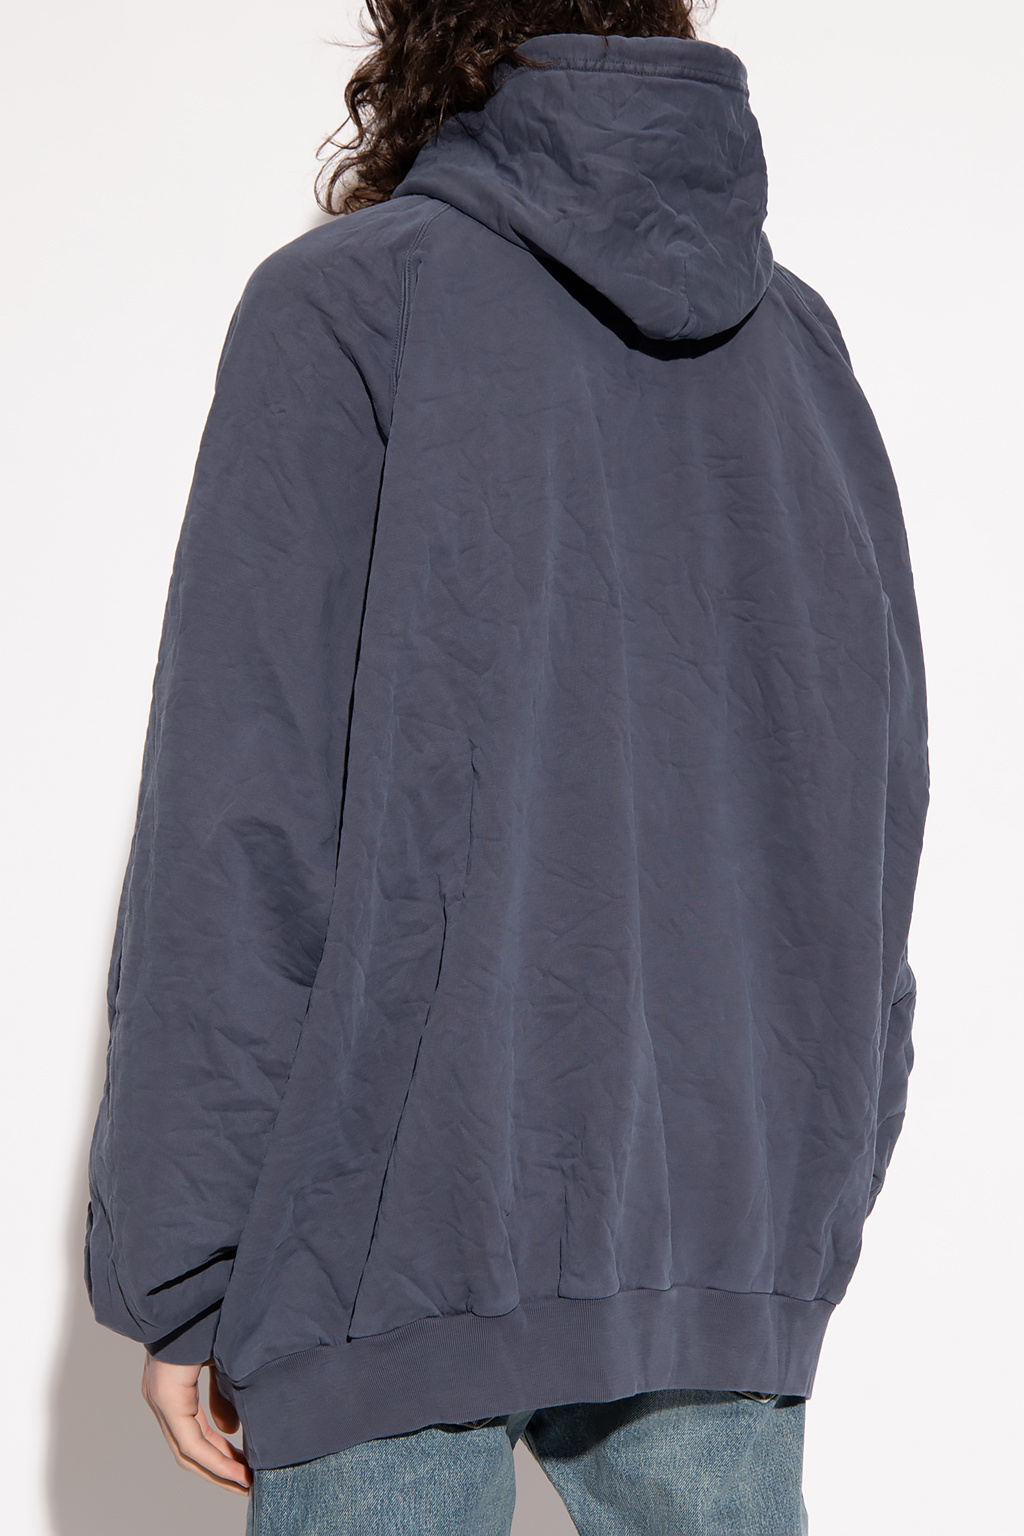 Balenciaga Printed Pixley hoodie